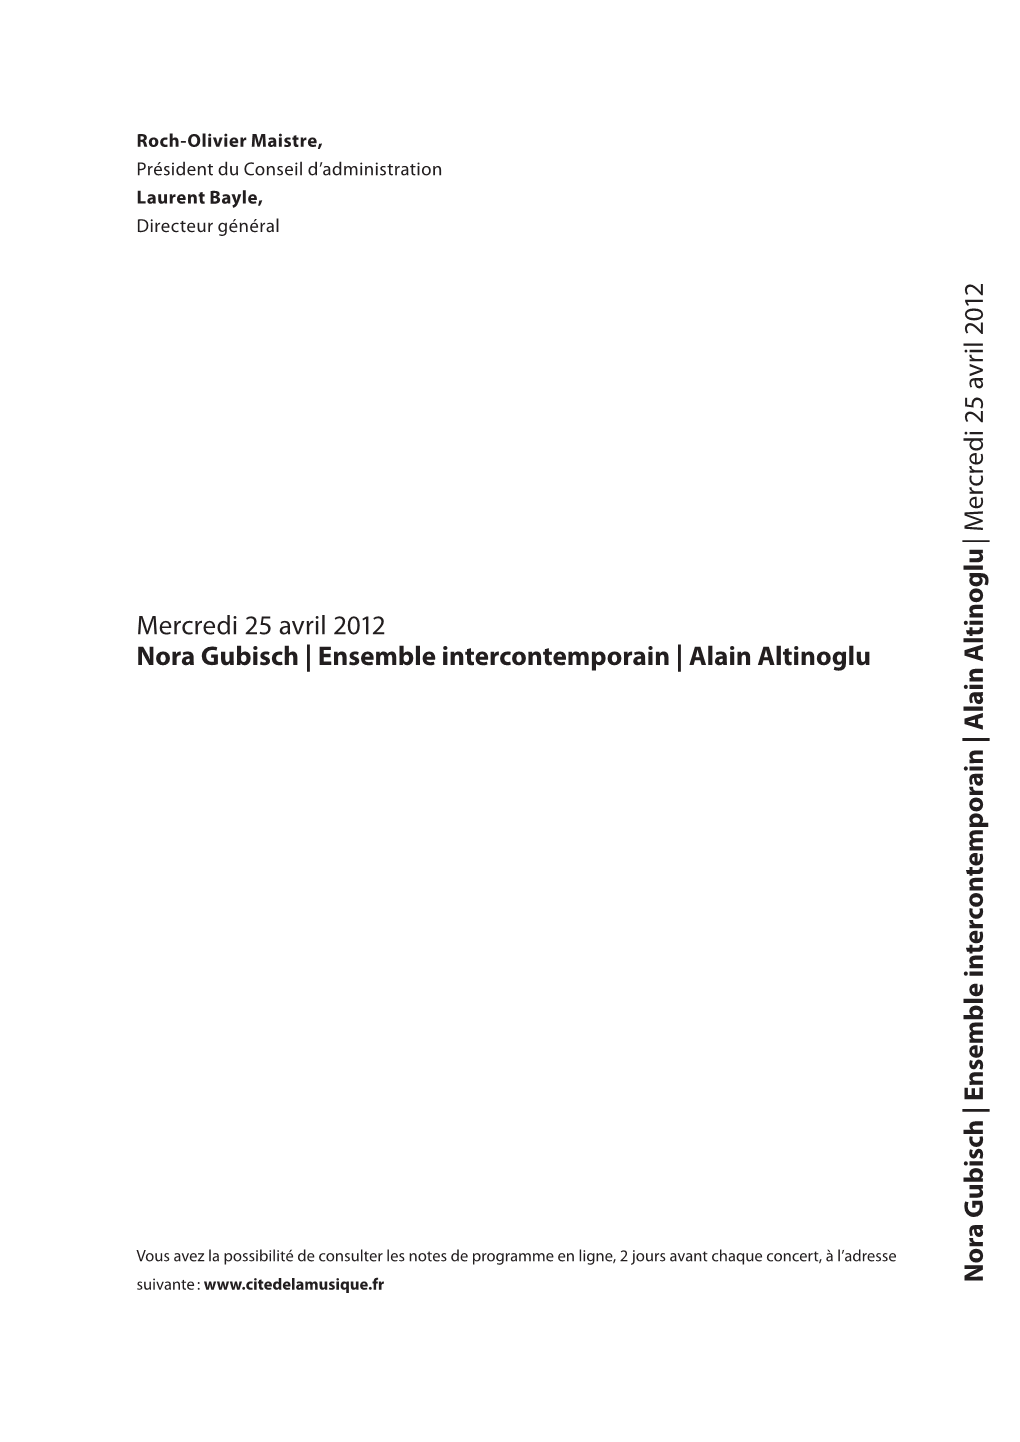 Mercredi 25 Avril 2012 Nora Gubisch | Ensemble Intercontemporain | Alain Altinoglu